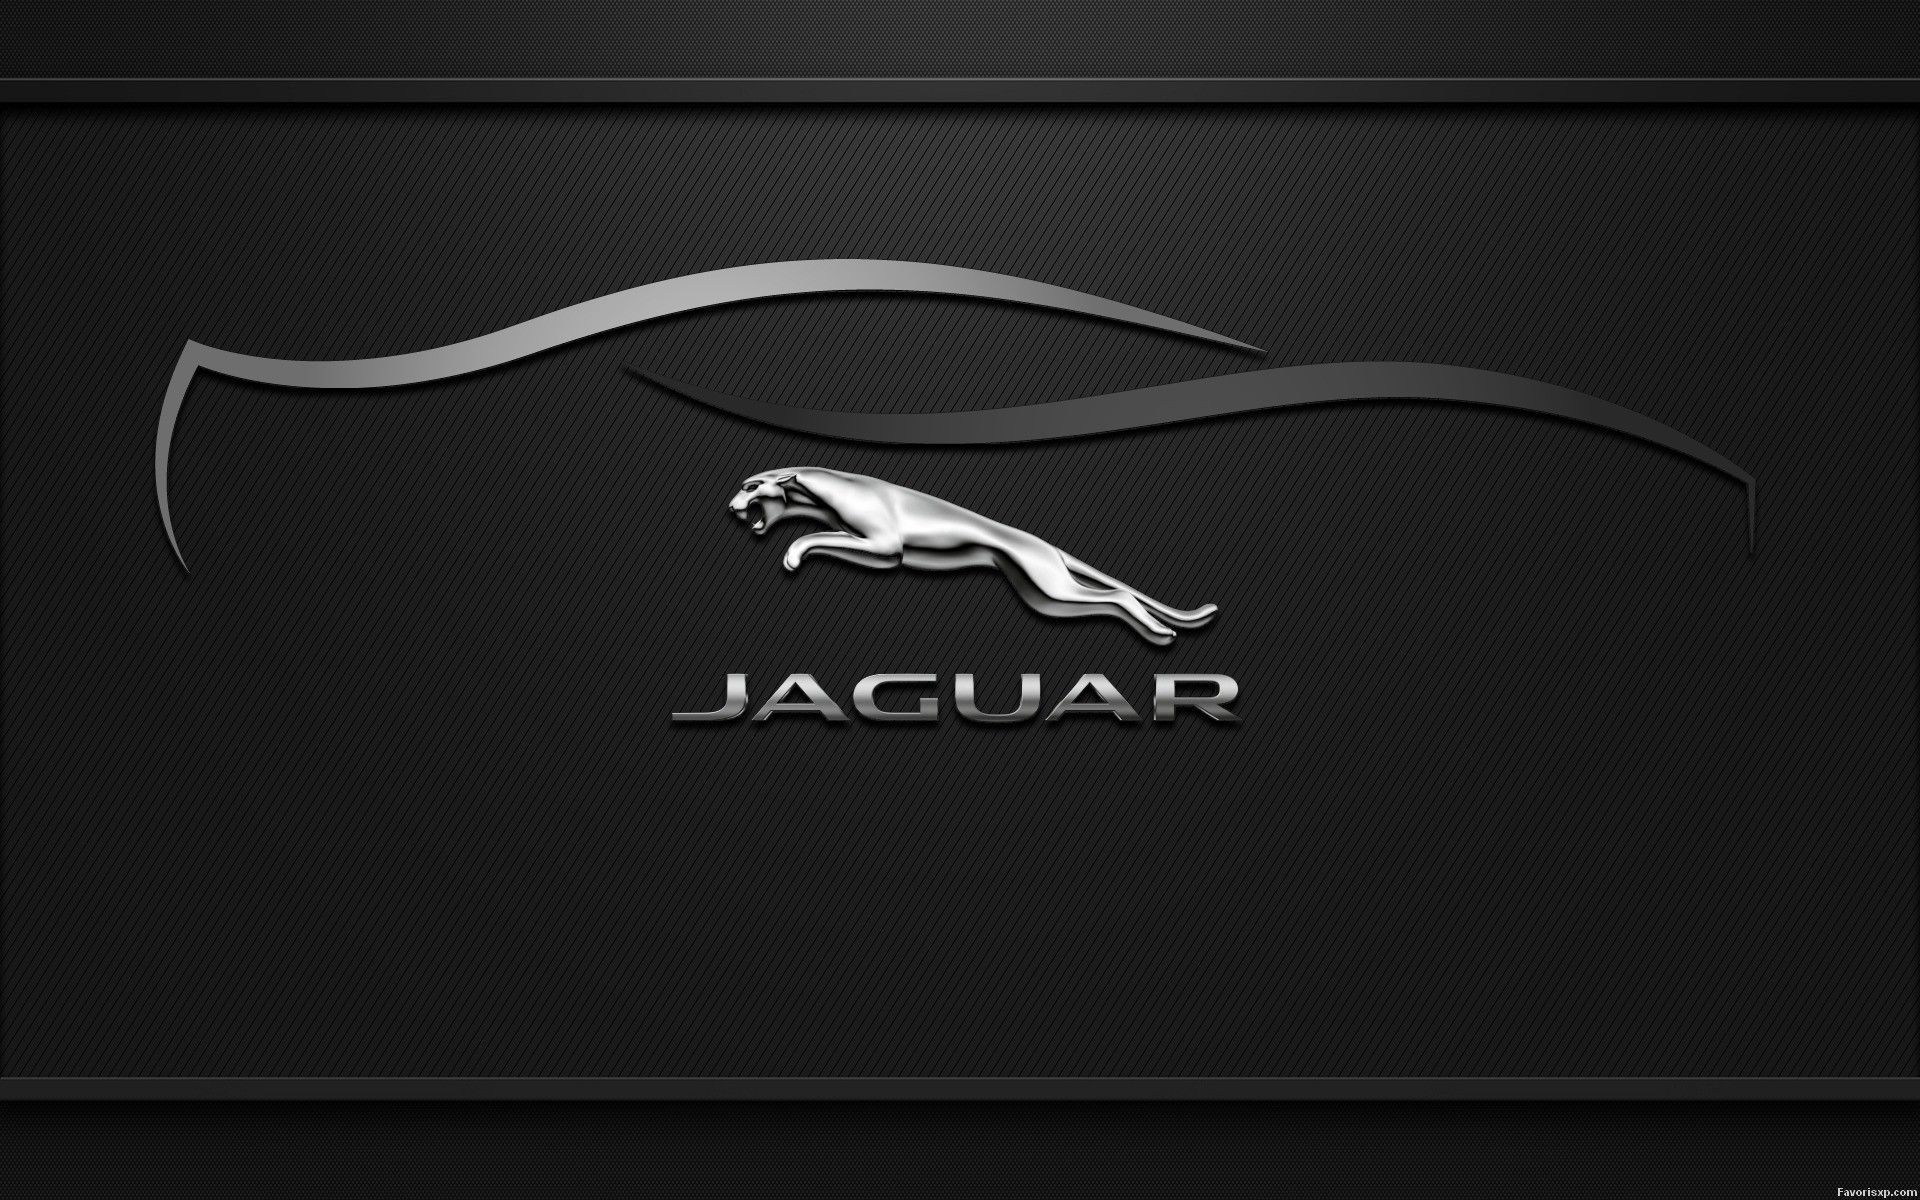 Jaguar Car Logo 4k Wallpaperwalpaperlist.com